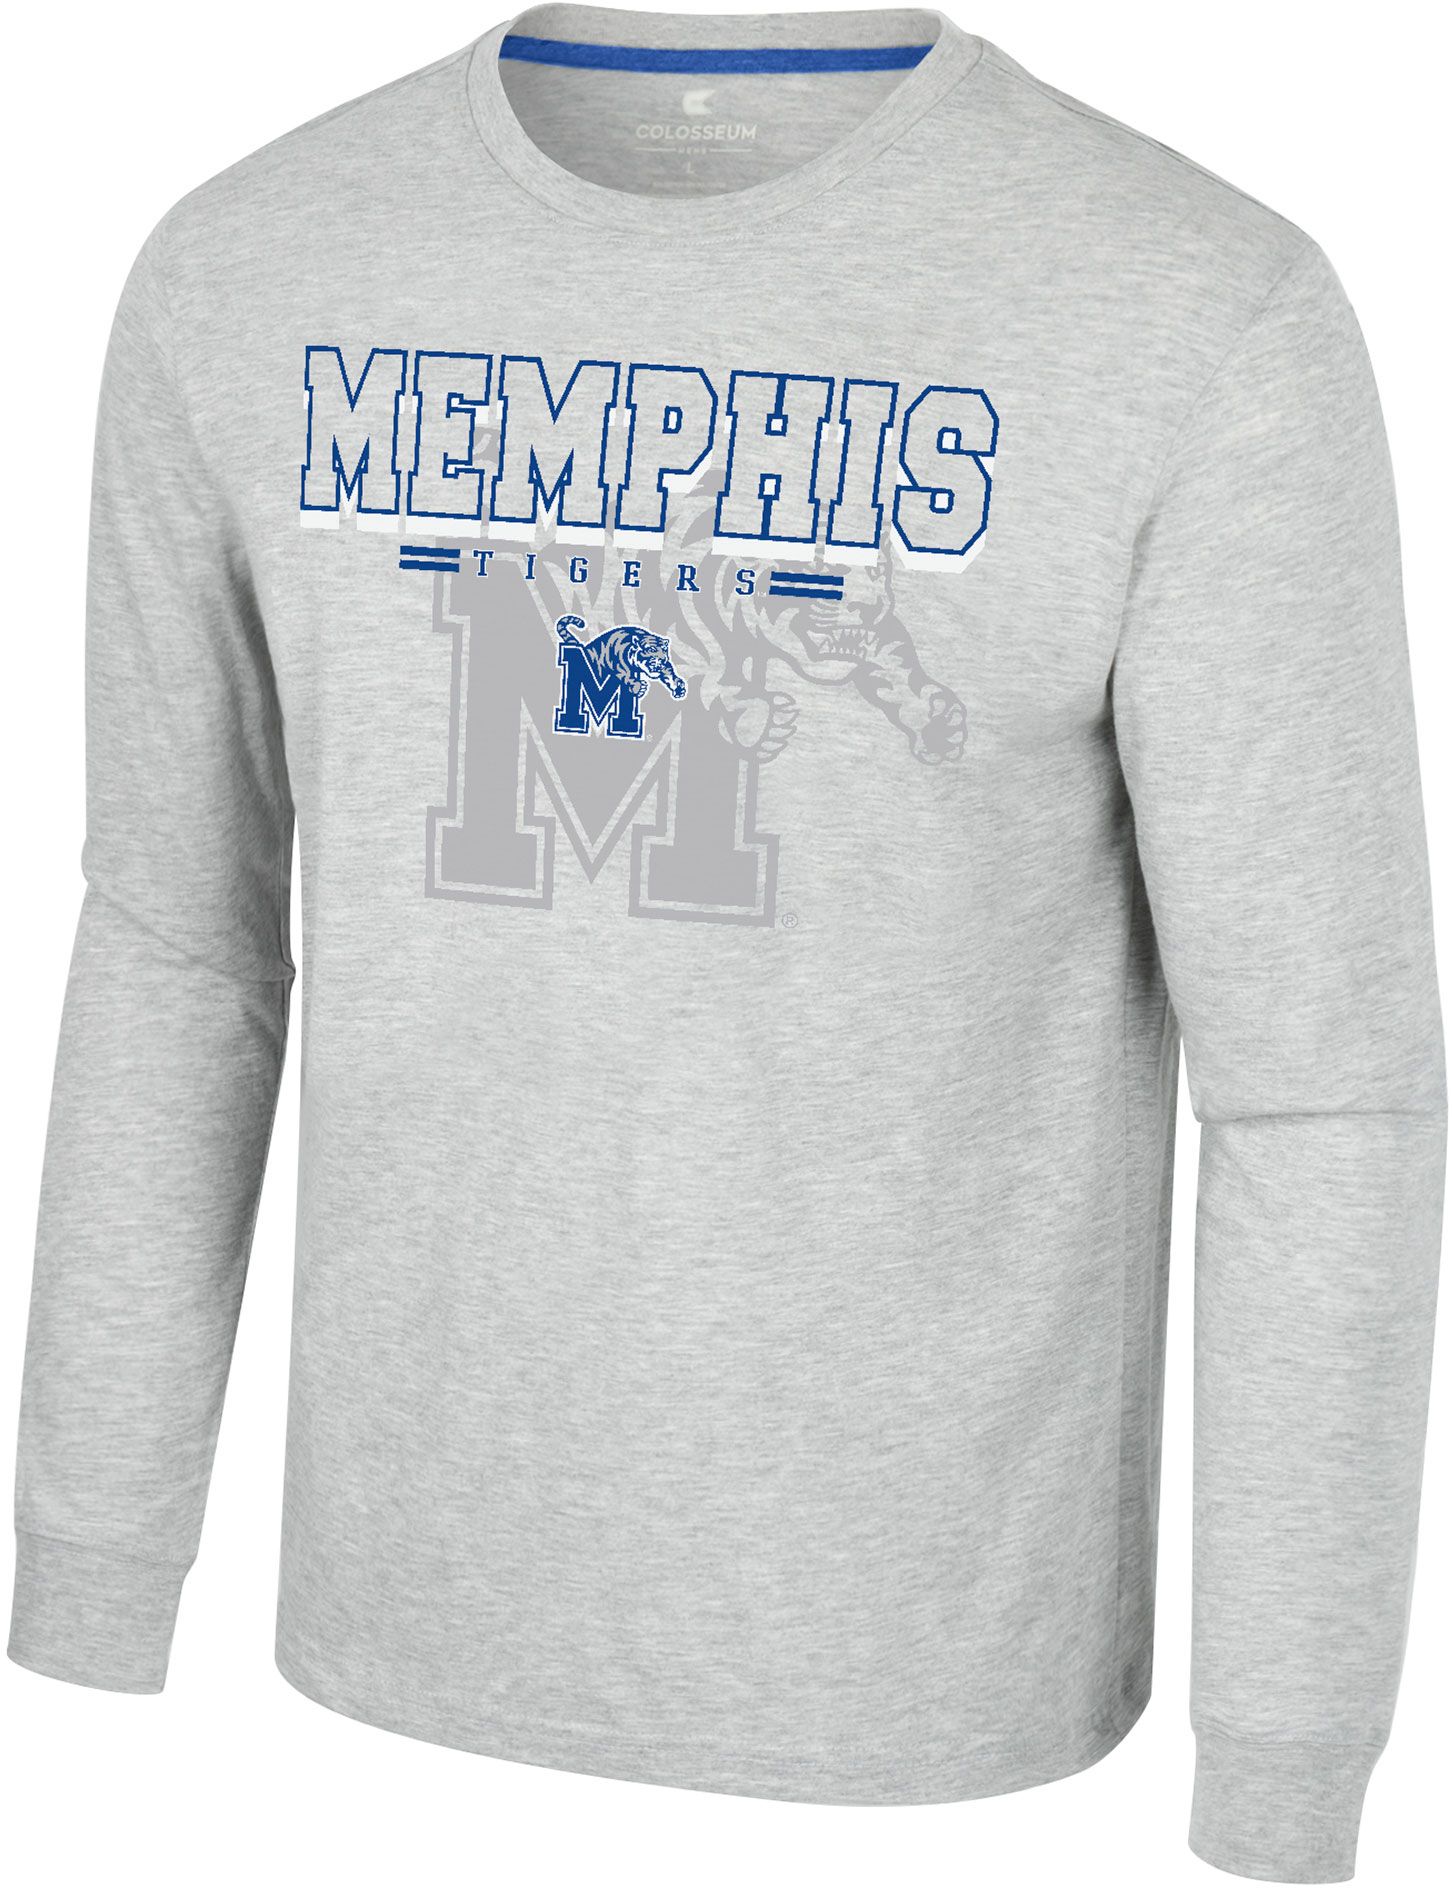 Nike Men's Memphis Tigers Penny Hardaway #25 Blue Replica Basketball Jersey